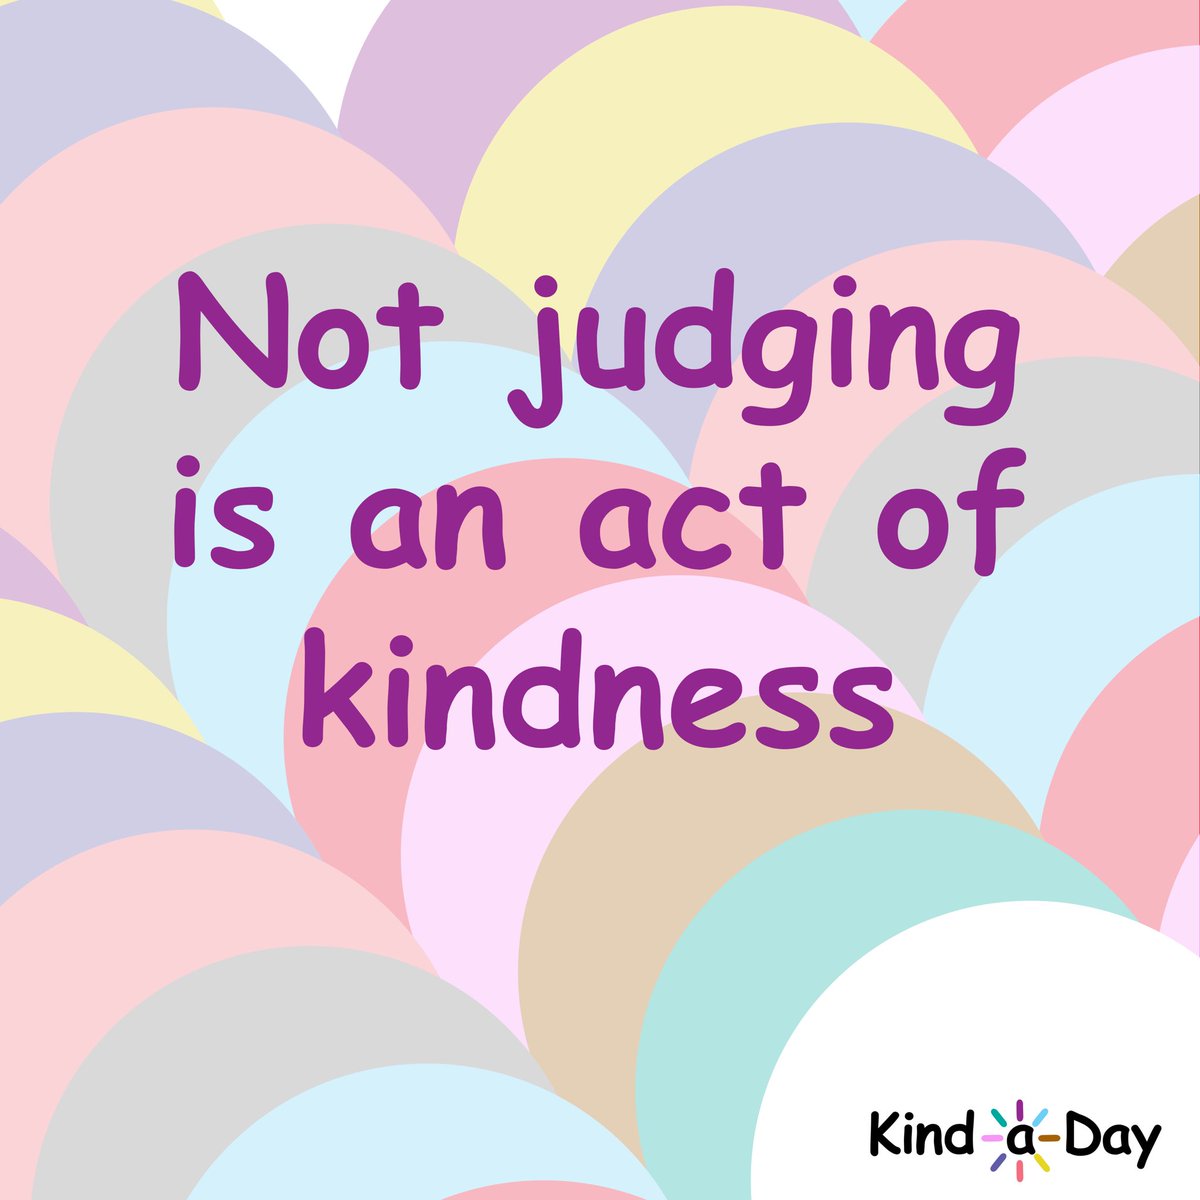 Not judging is an act of kindness 💕

#DontJudge #NoJudging #Judgement #StopJudging #BeKind #kind #kindness #KindLife #ActsOfKindness #SpreadKindness #KindnessMatters #ChooseKindness #KindnessWins #KindaDay #KindnessAlways #KindnessEveryday #Kindness365 #KindnessChallenge